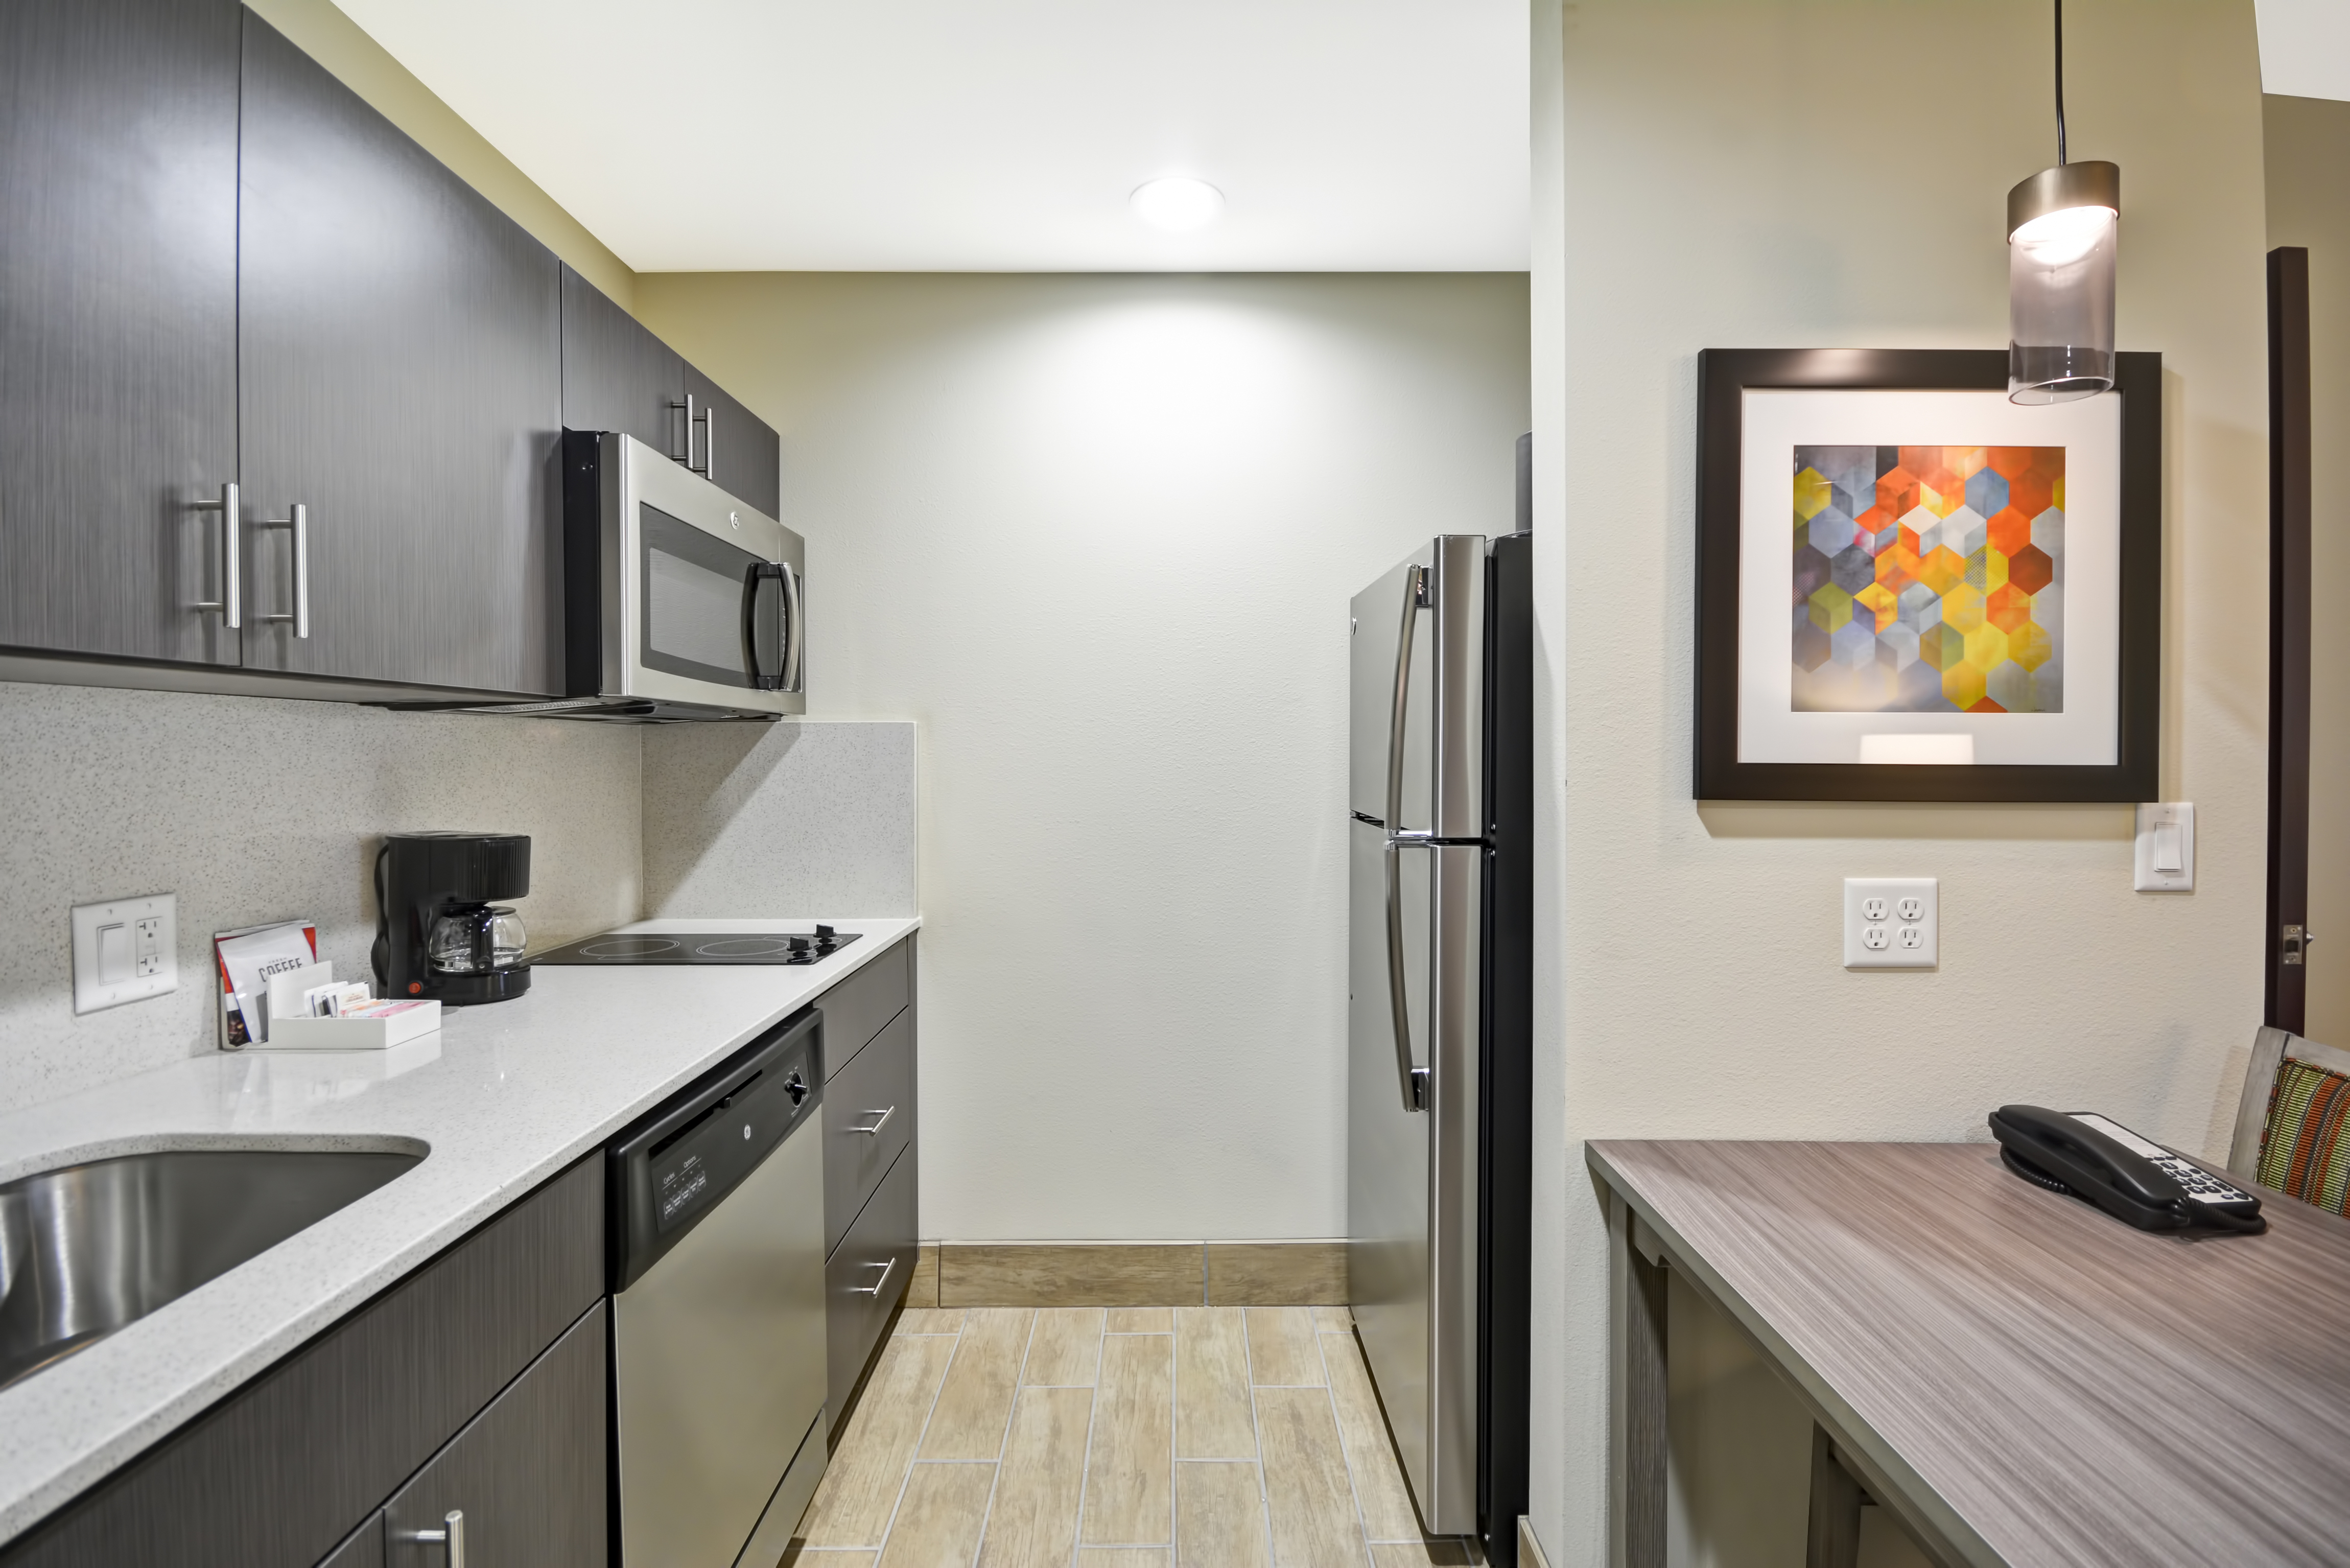 Homewood Suites by Hilton Orlando Theme Parks - Suite Kitchen Appliances and Counter Space